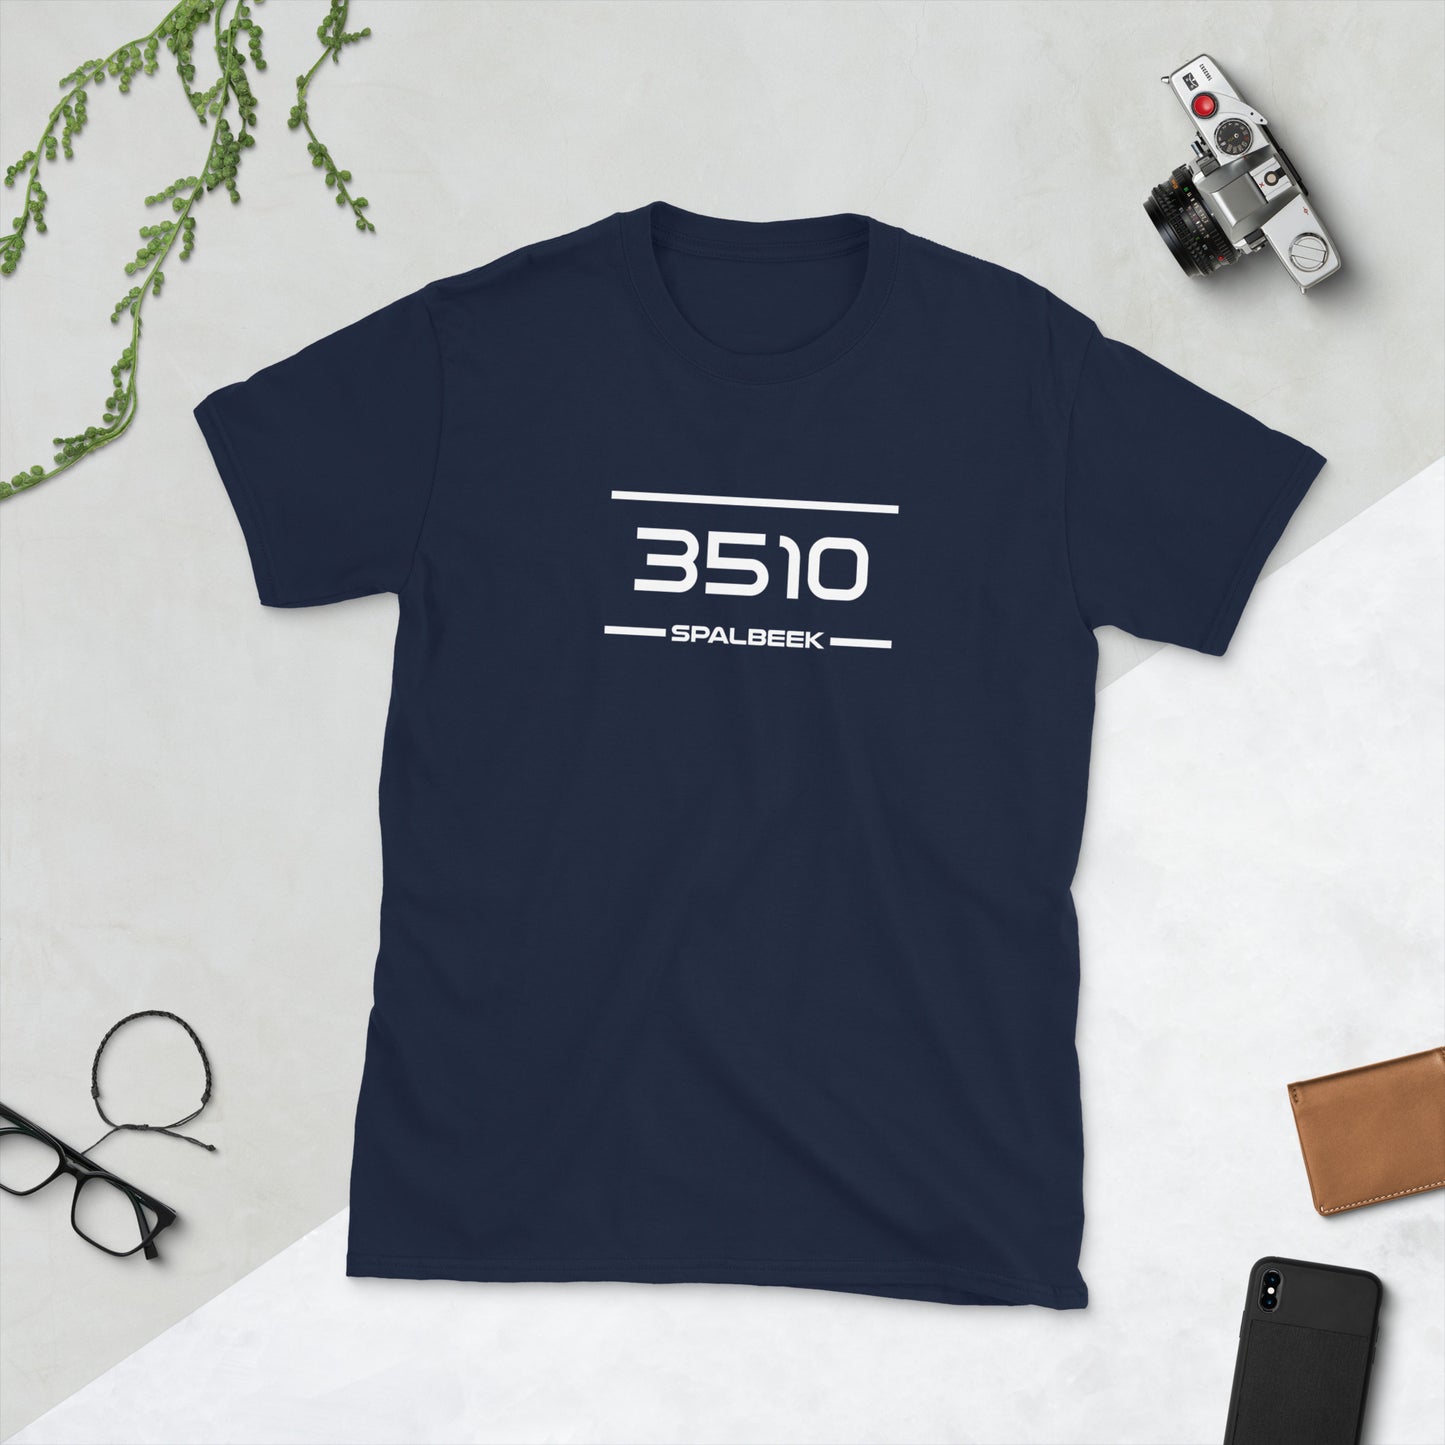 Tshirt - 3510 - Spalbeek